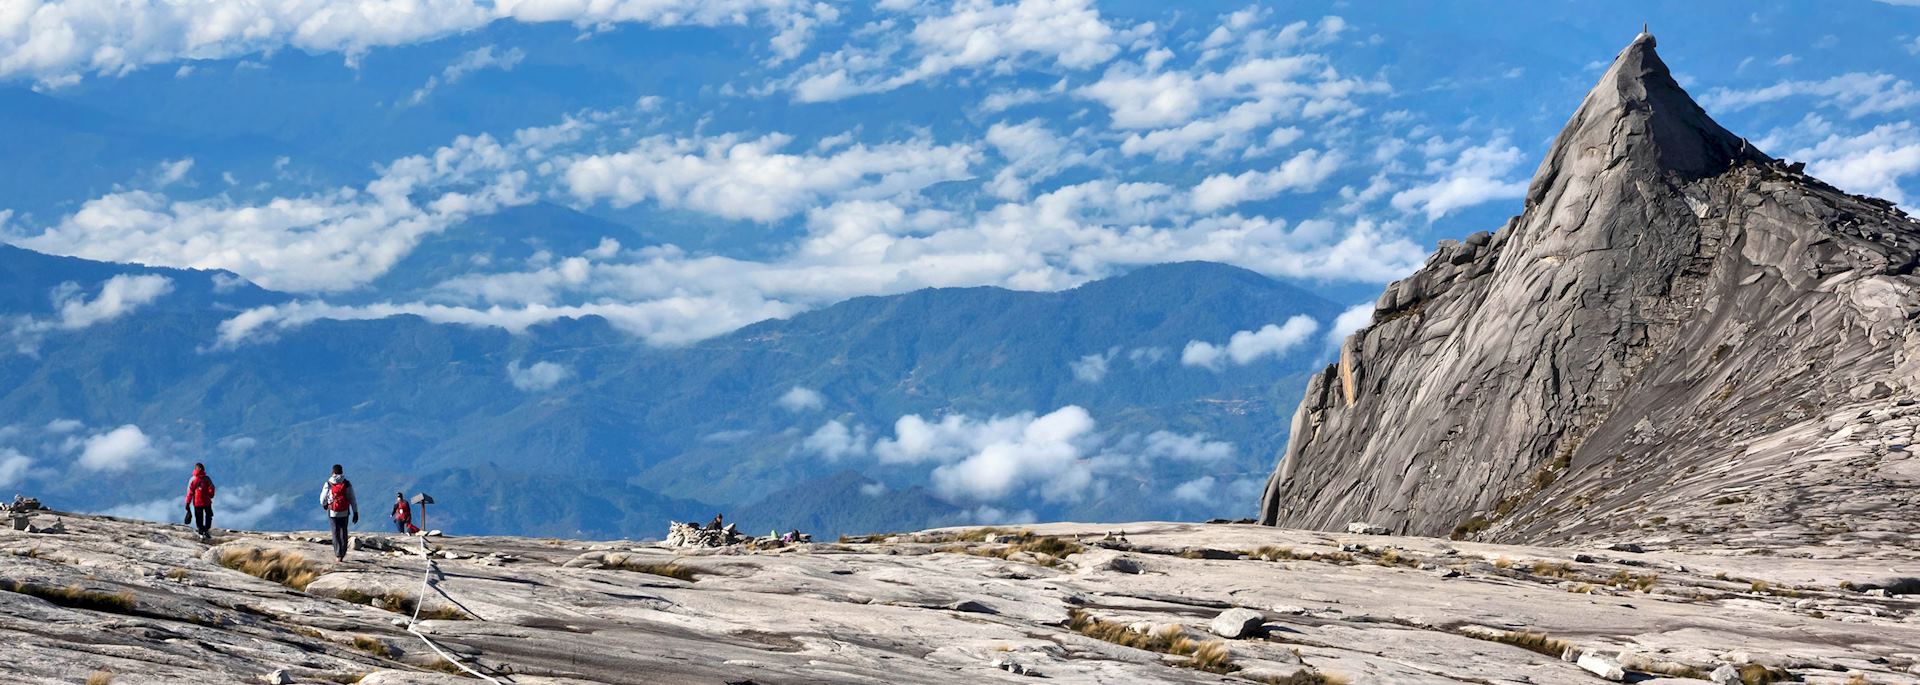 Climbing Mount Kinabalu